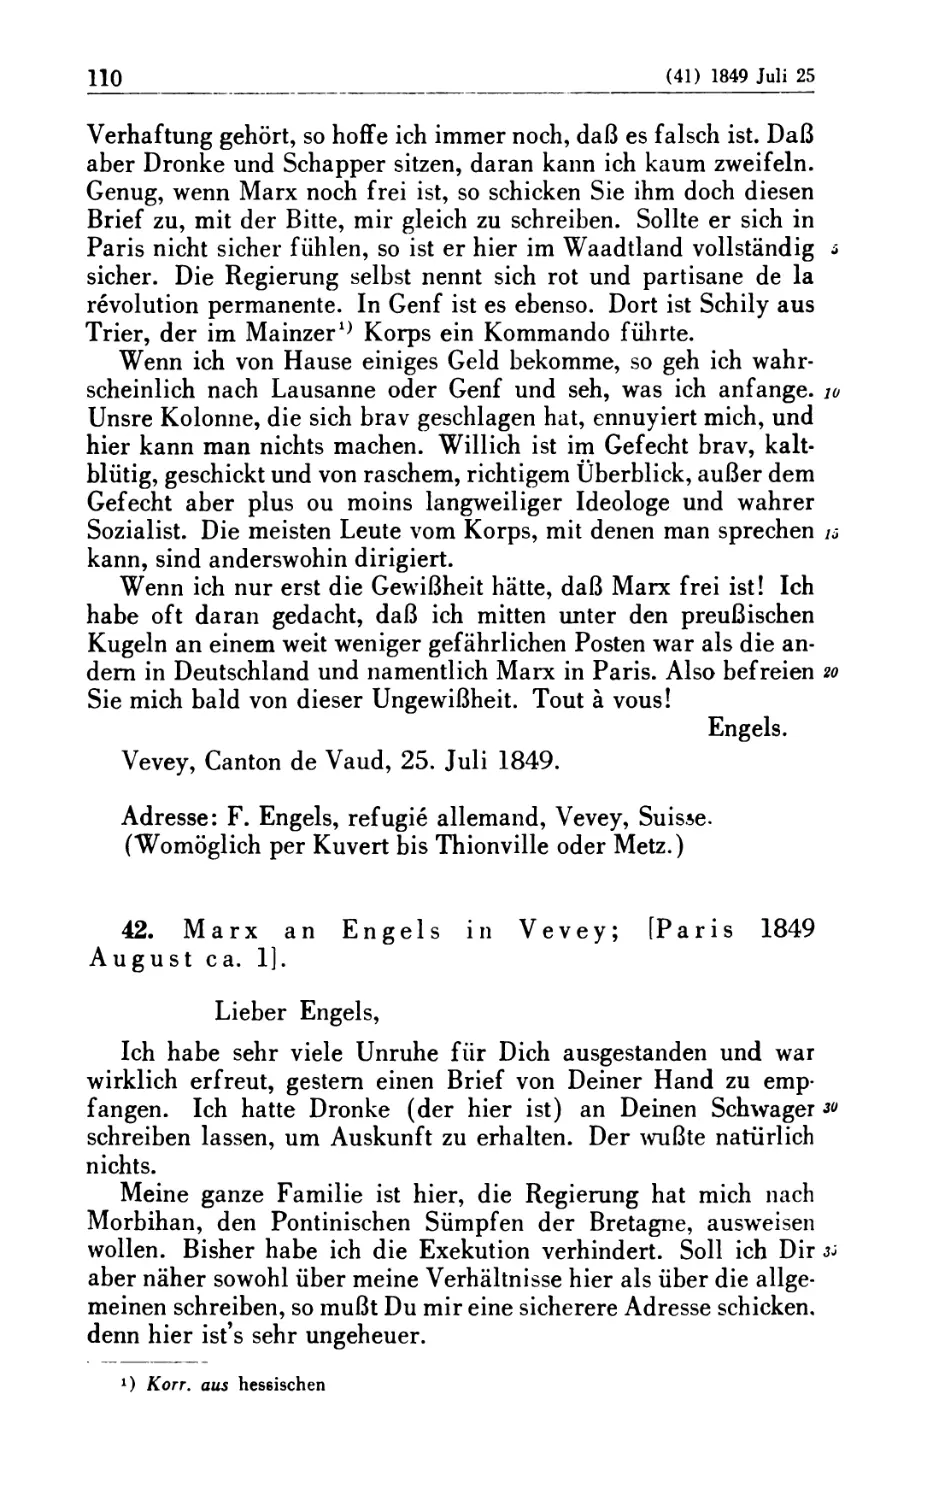 42. Marx an Engels in Vevey; [Paris 1849 August ca. 1]